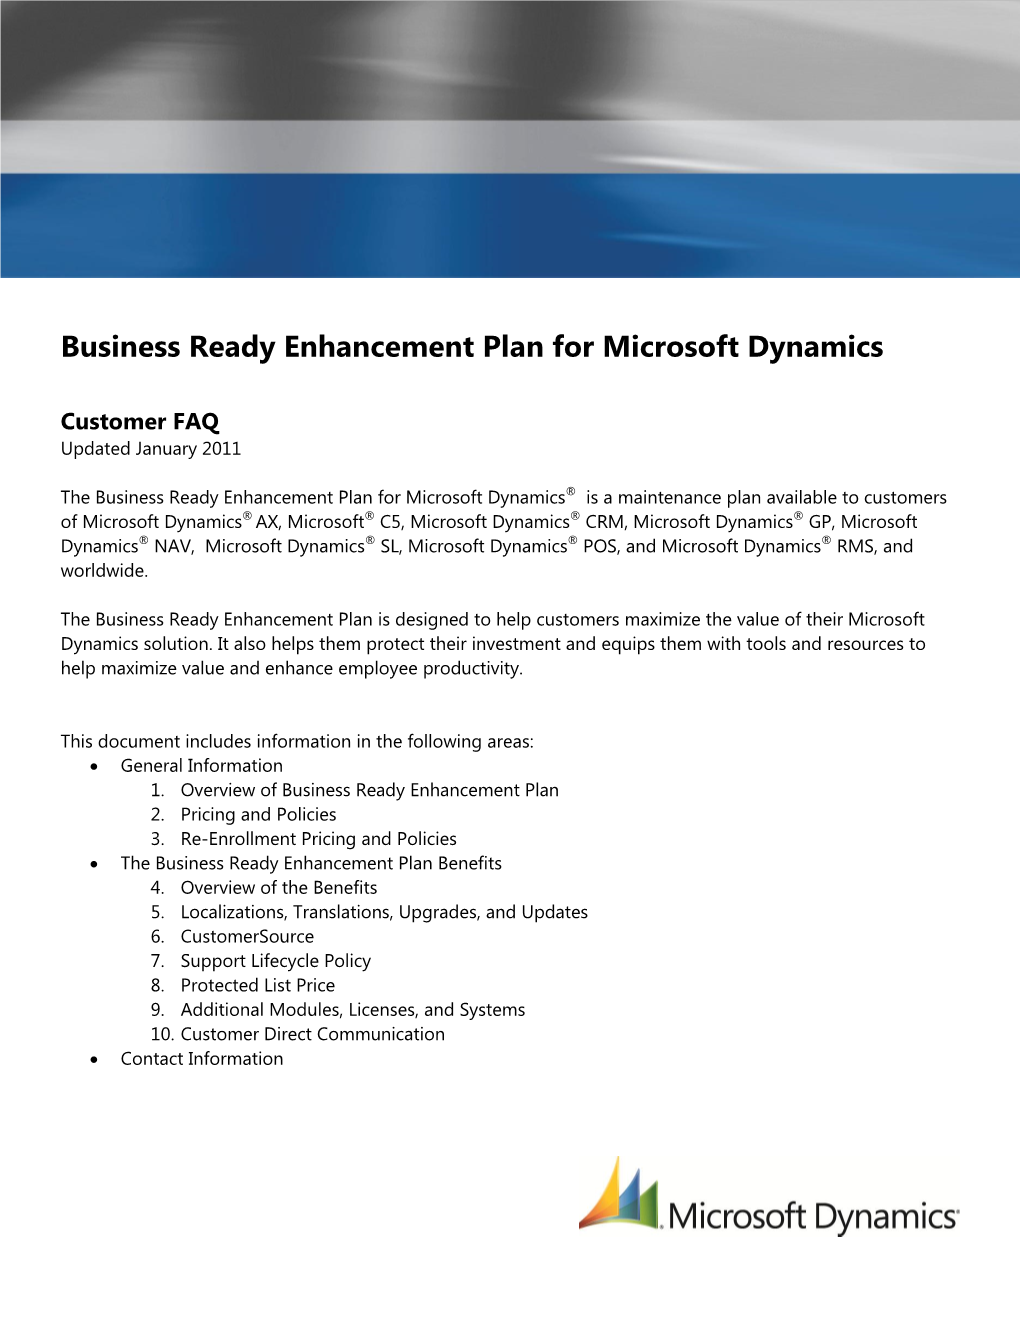 microsoft dynamics business ready enhancement plan